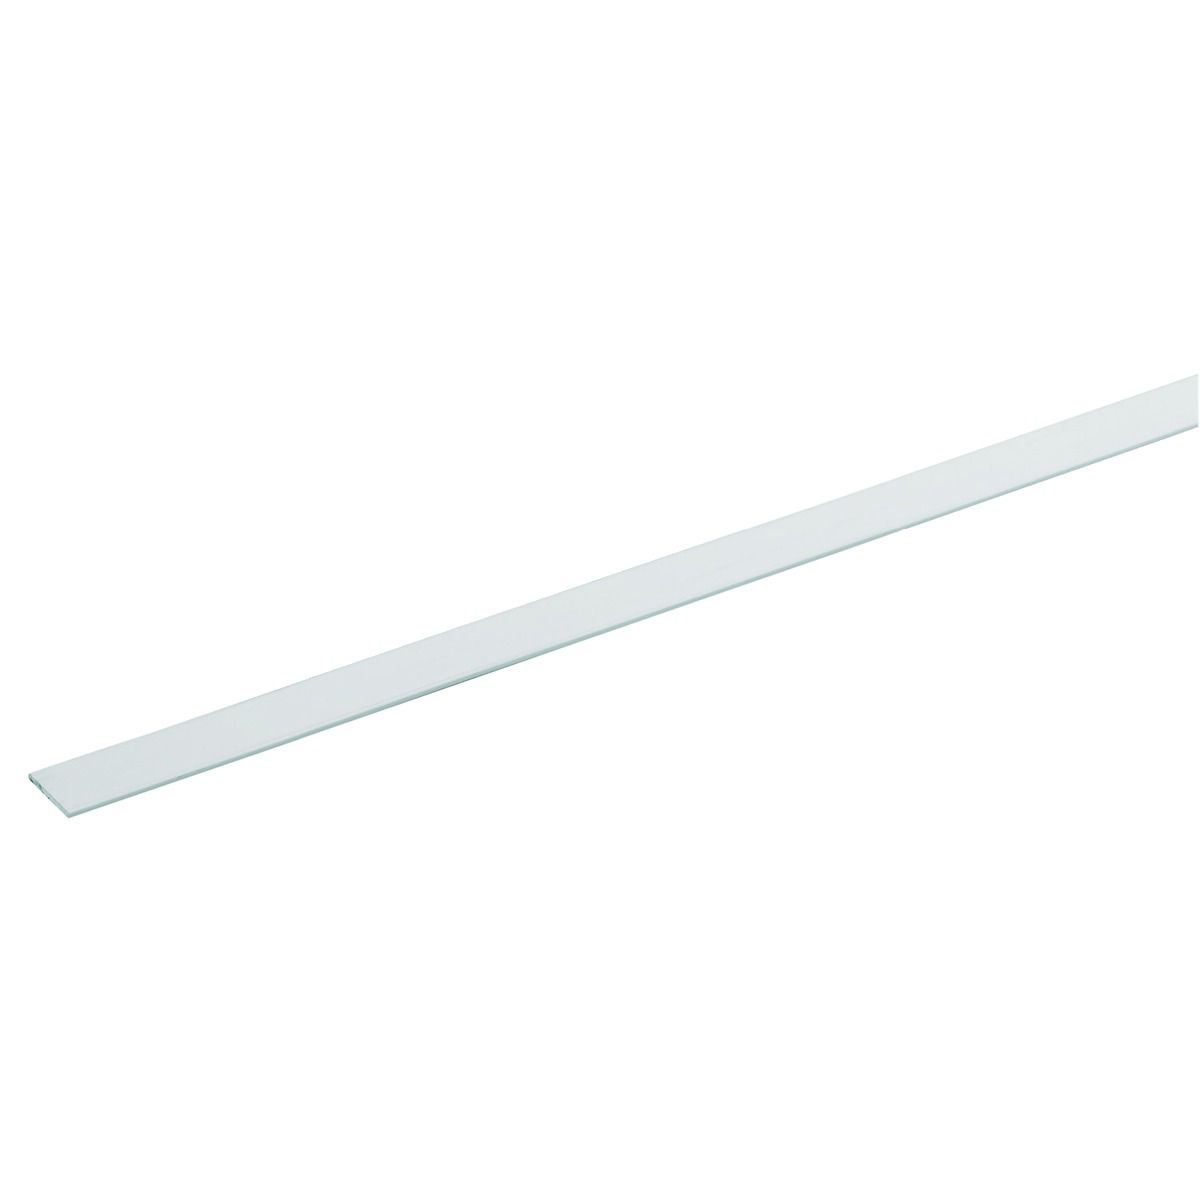 Image of Wickes 19.5mm Multi-Purpose Flat Bar - White PVCu 1m